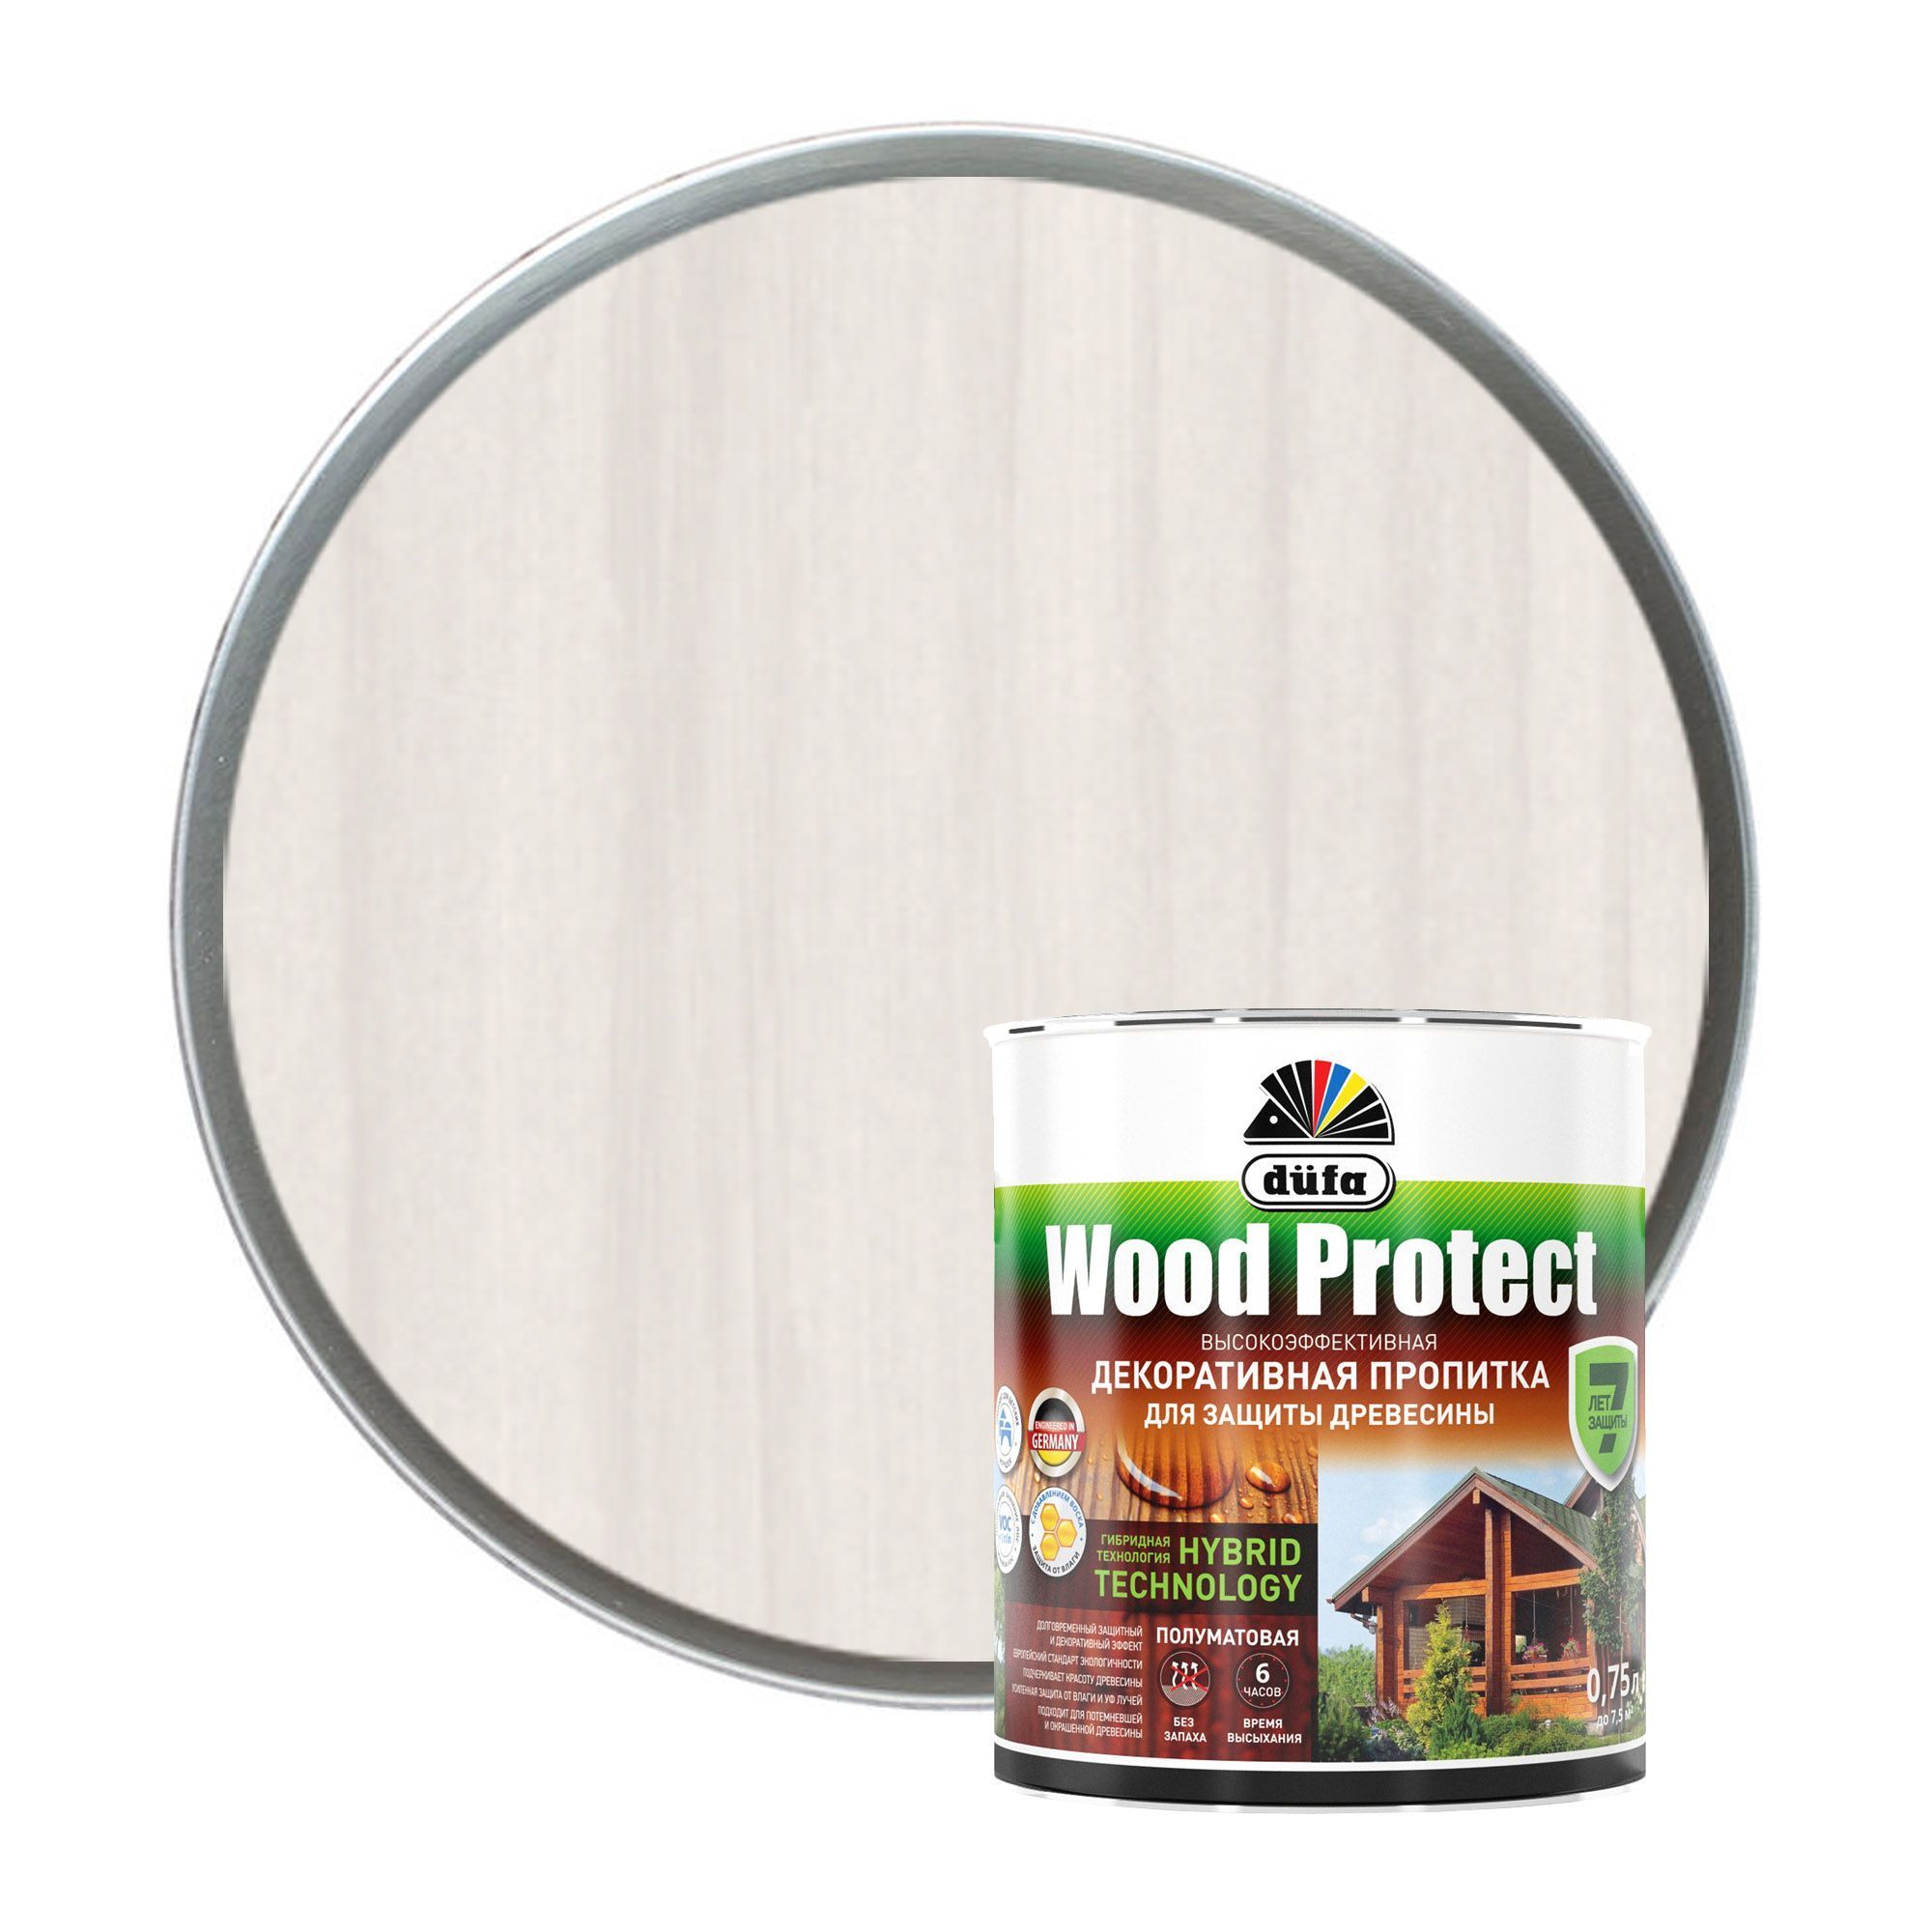 Dufa Wood protect дуб